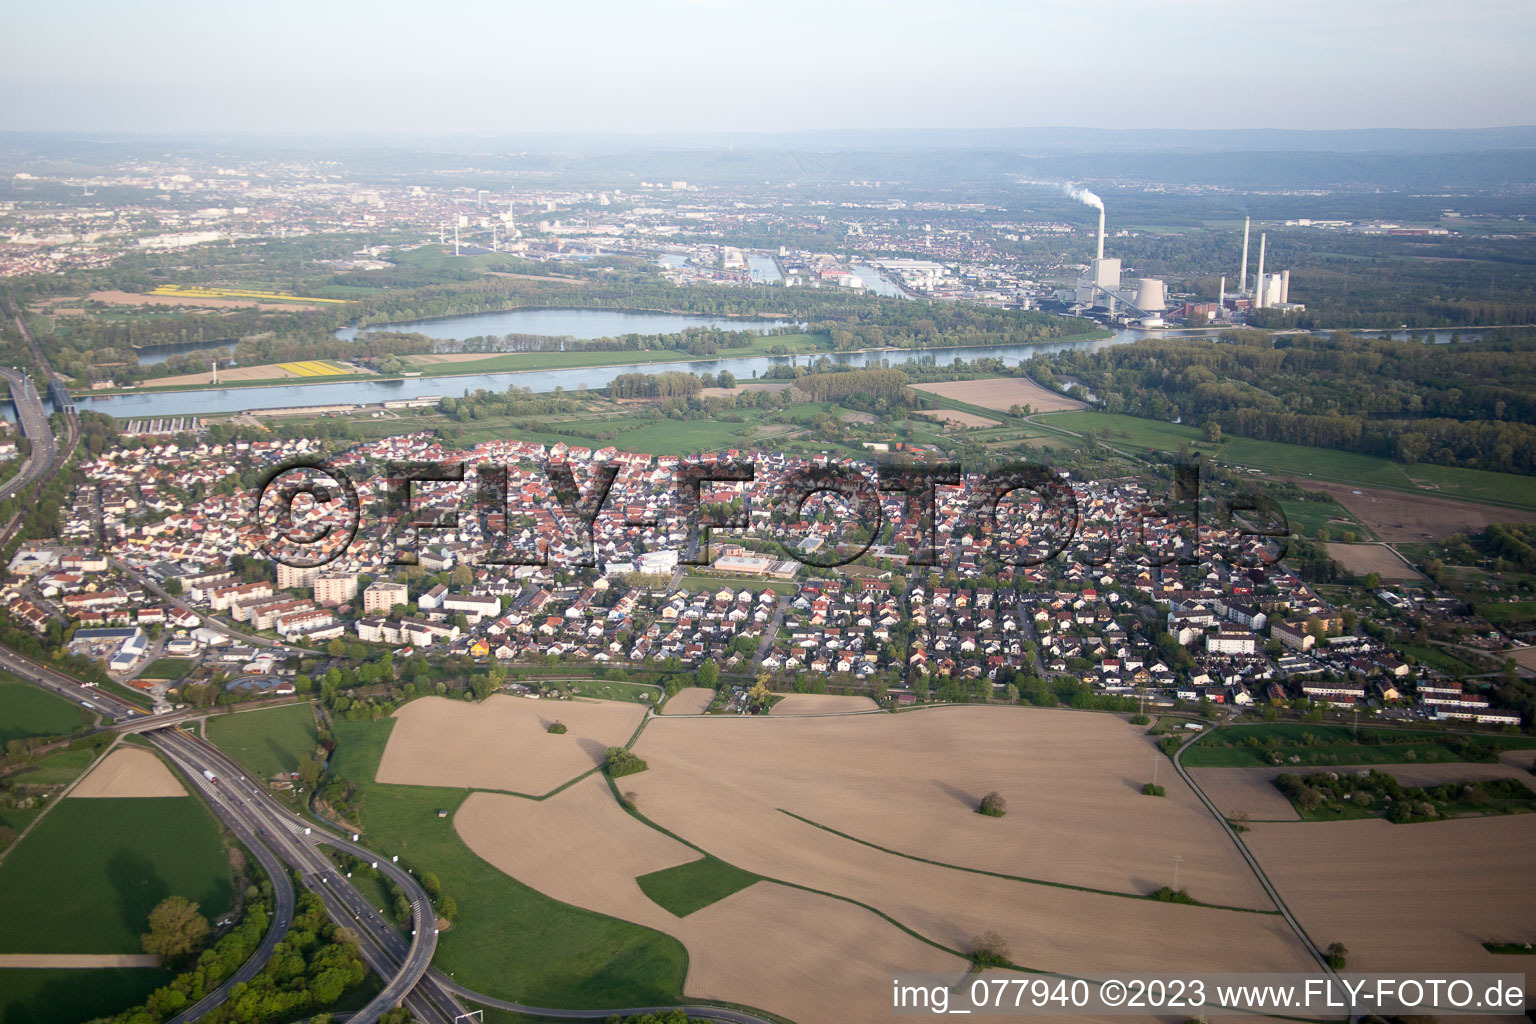 Wörth am Rhein in the state Rhineland-Palatinate, Germany from a drone